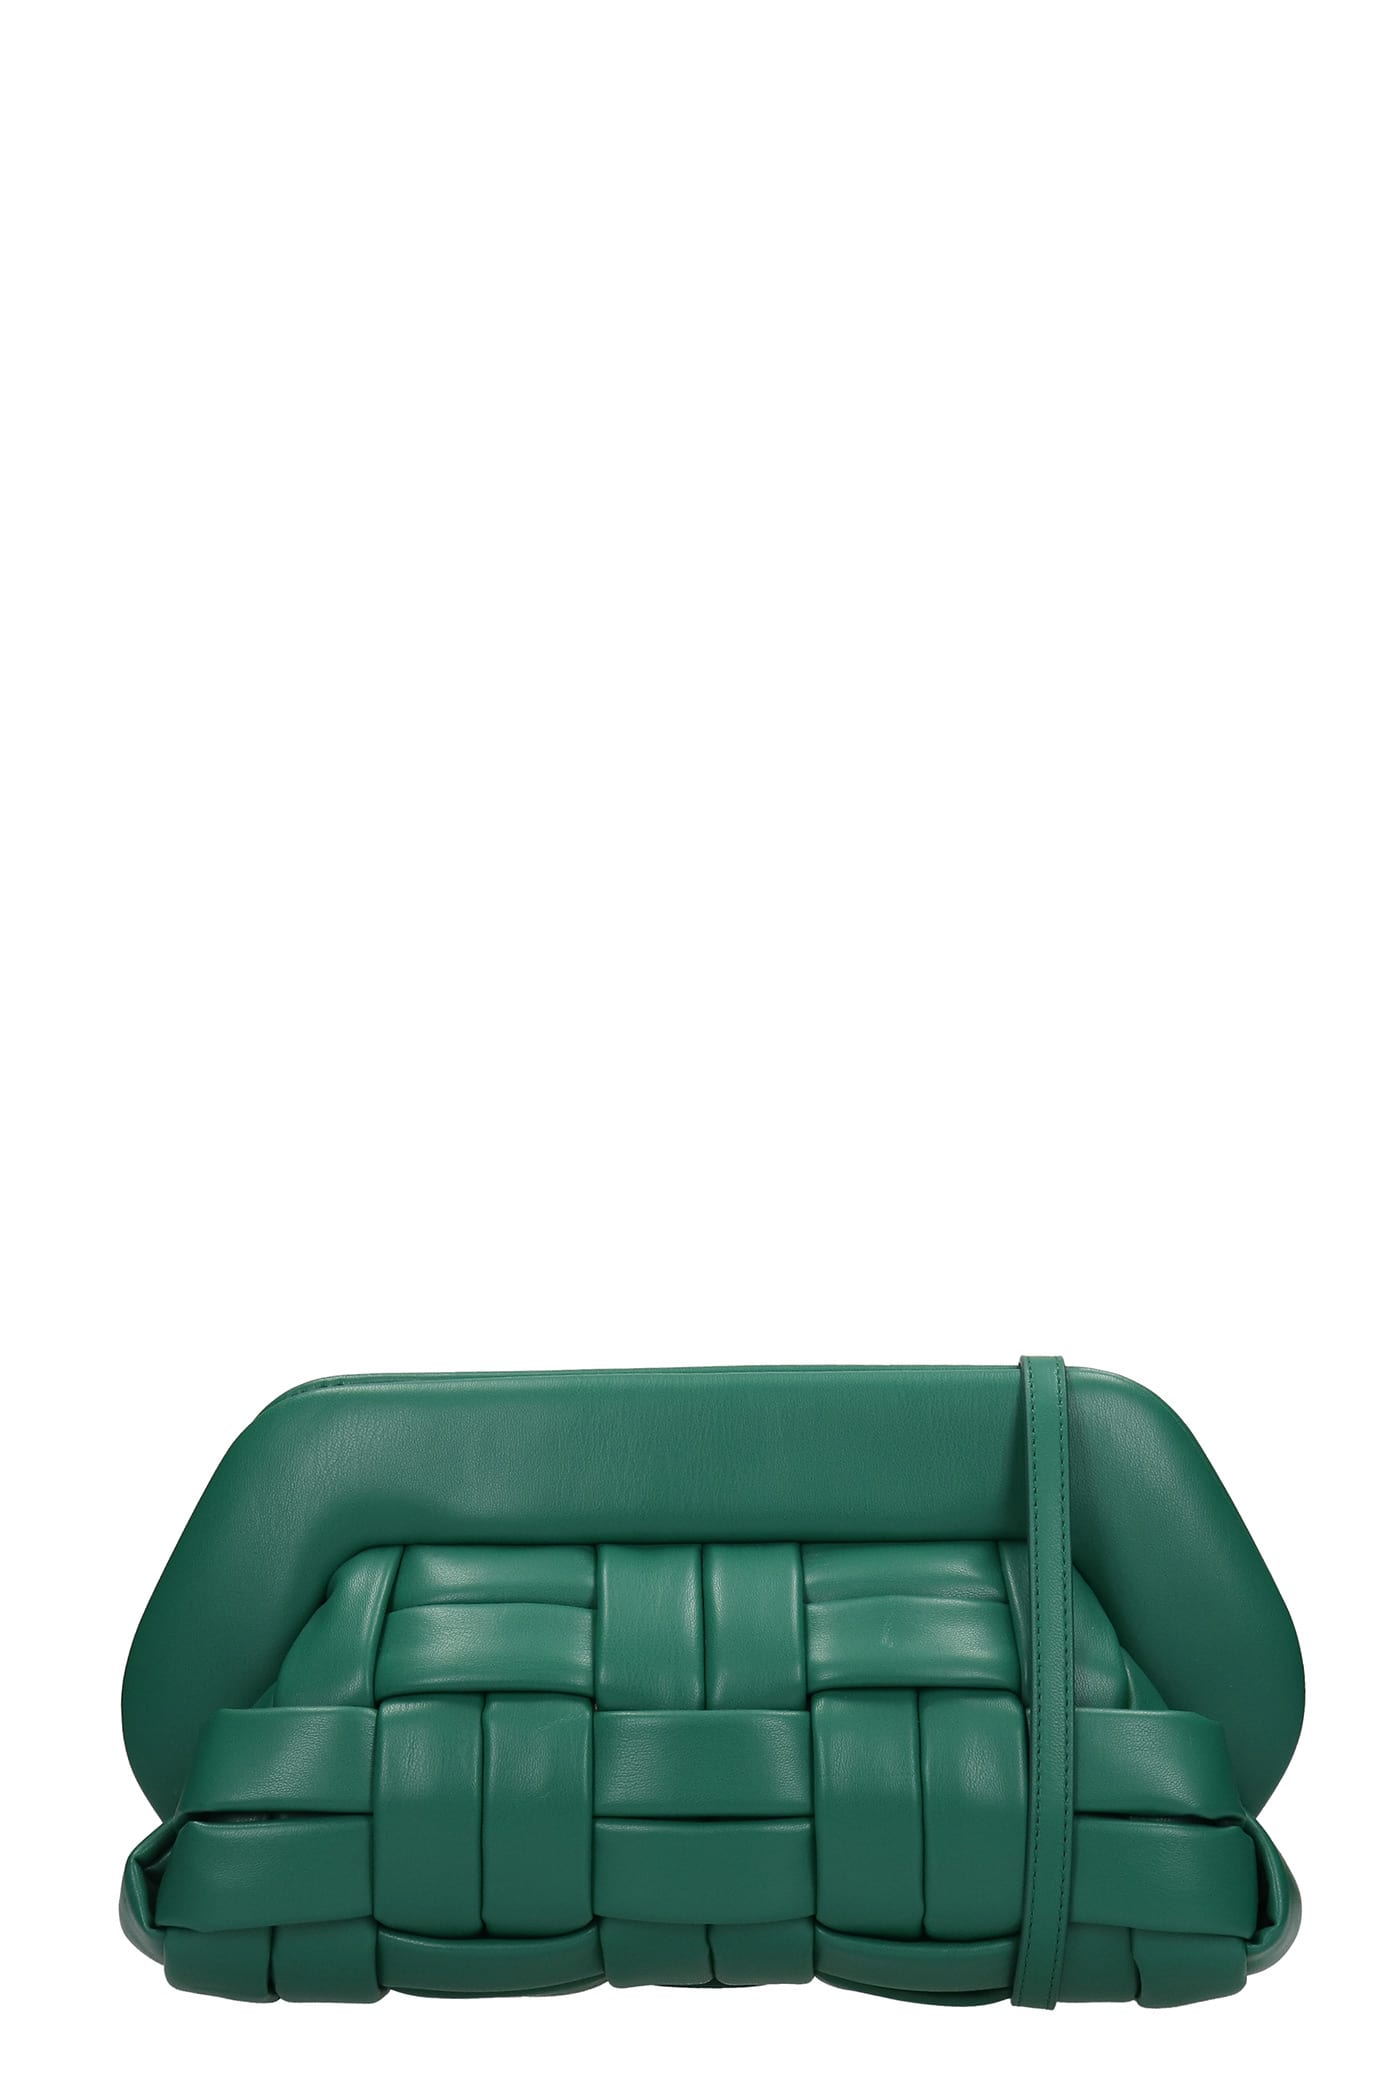 THEMOIRè Bios Weaved Clutch In Green Faux Leather